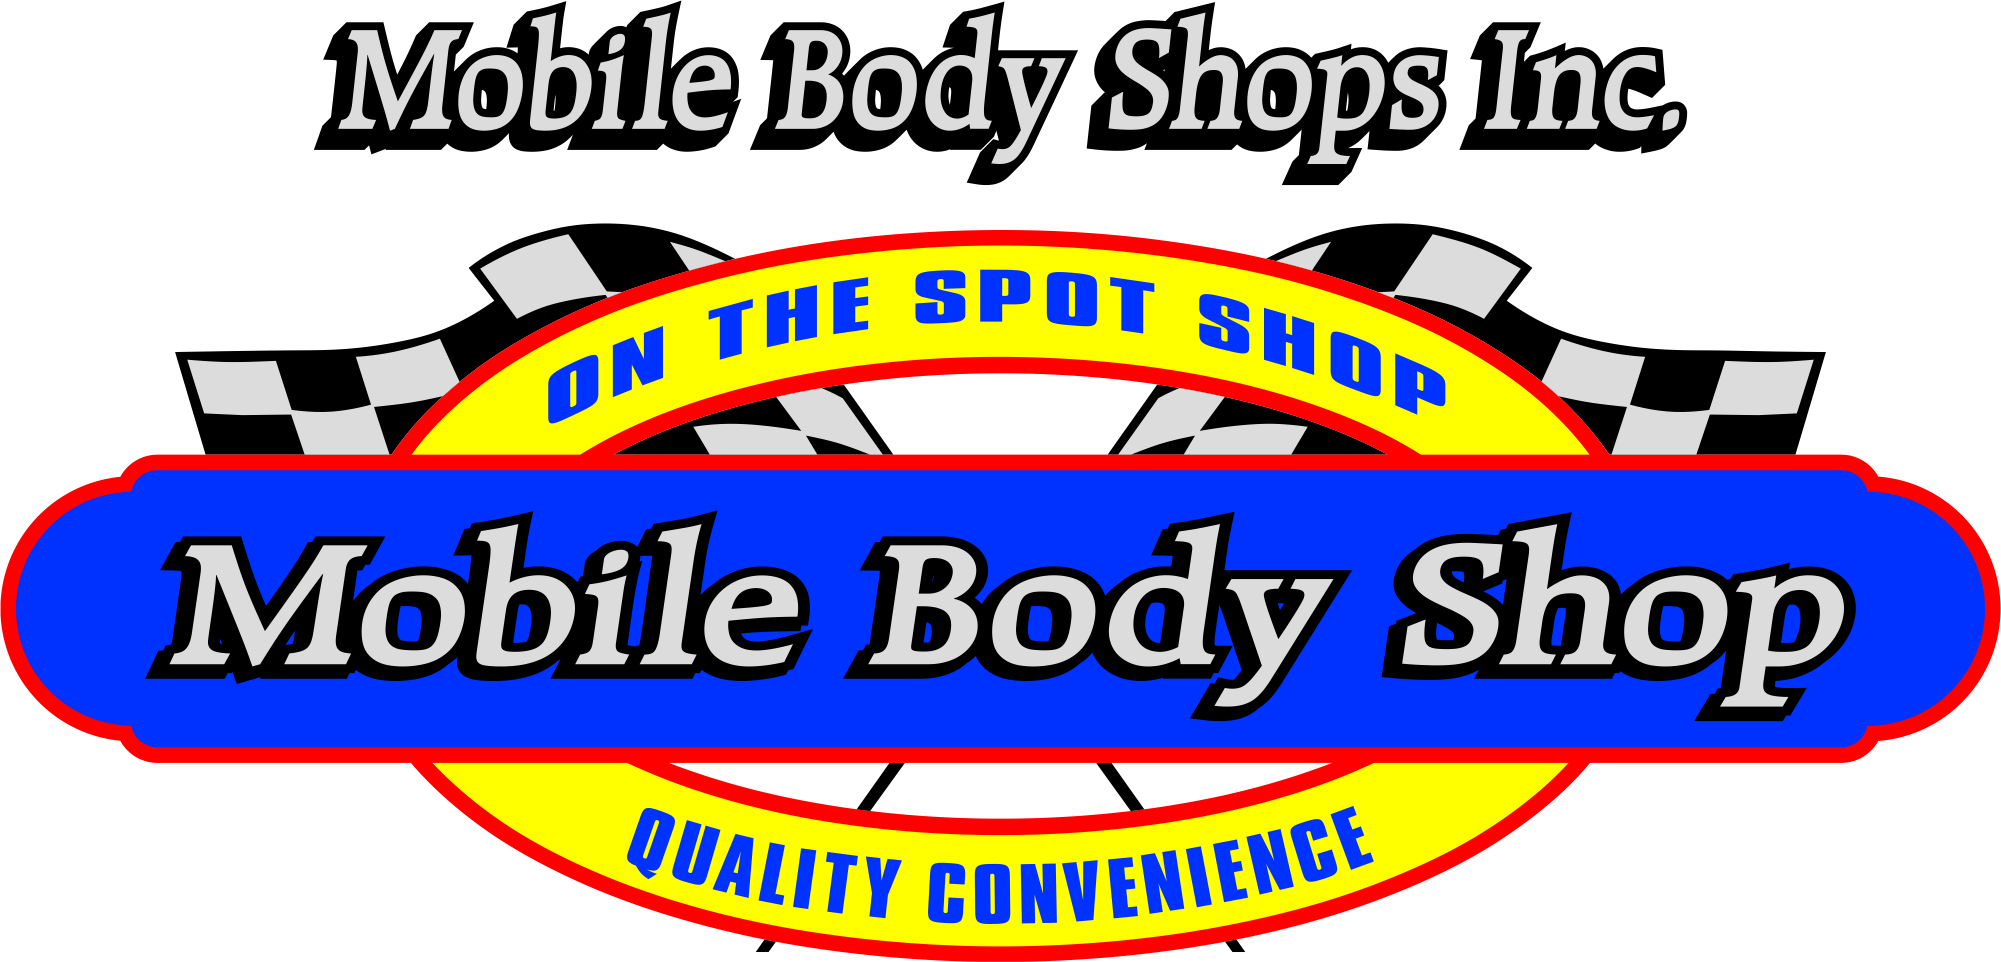 Mobile Body Shops Inc.